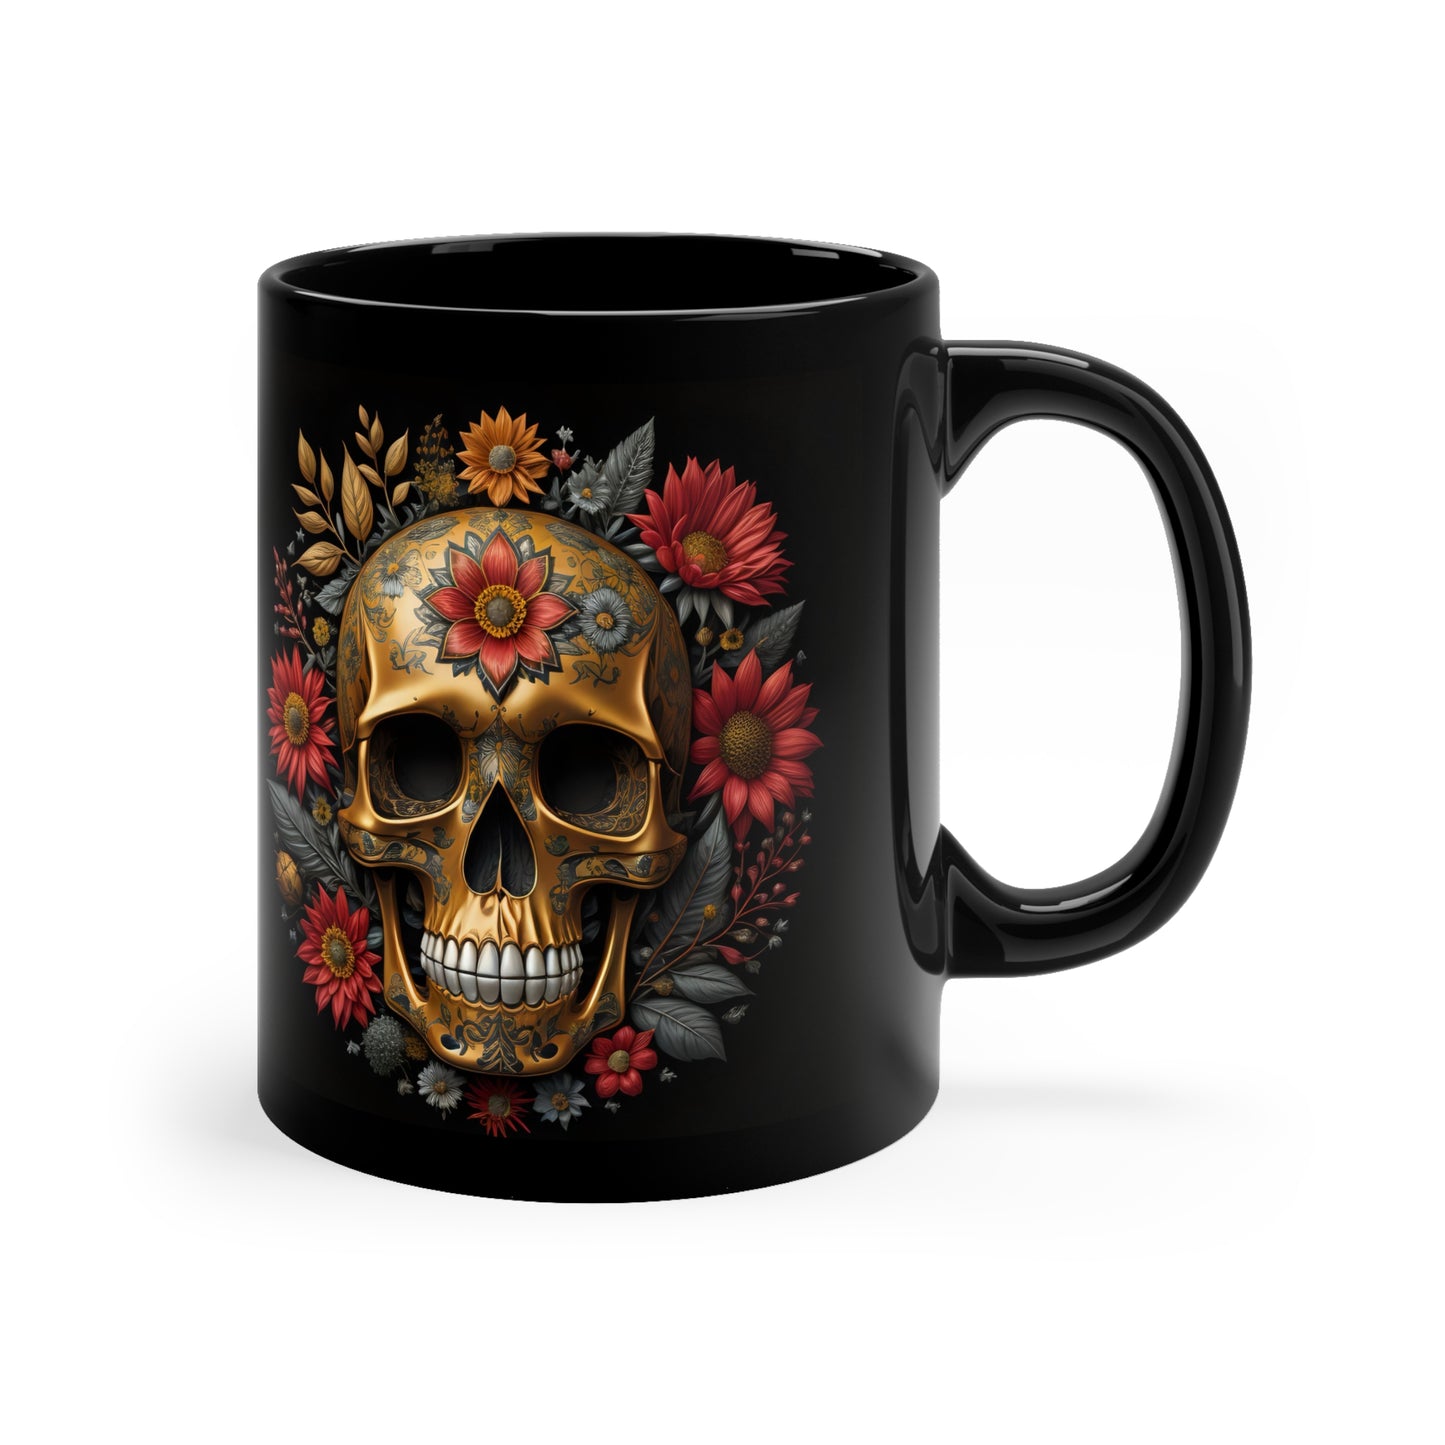 Flower Skulls Black Coffee Mug, 11oz